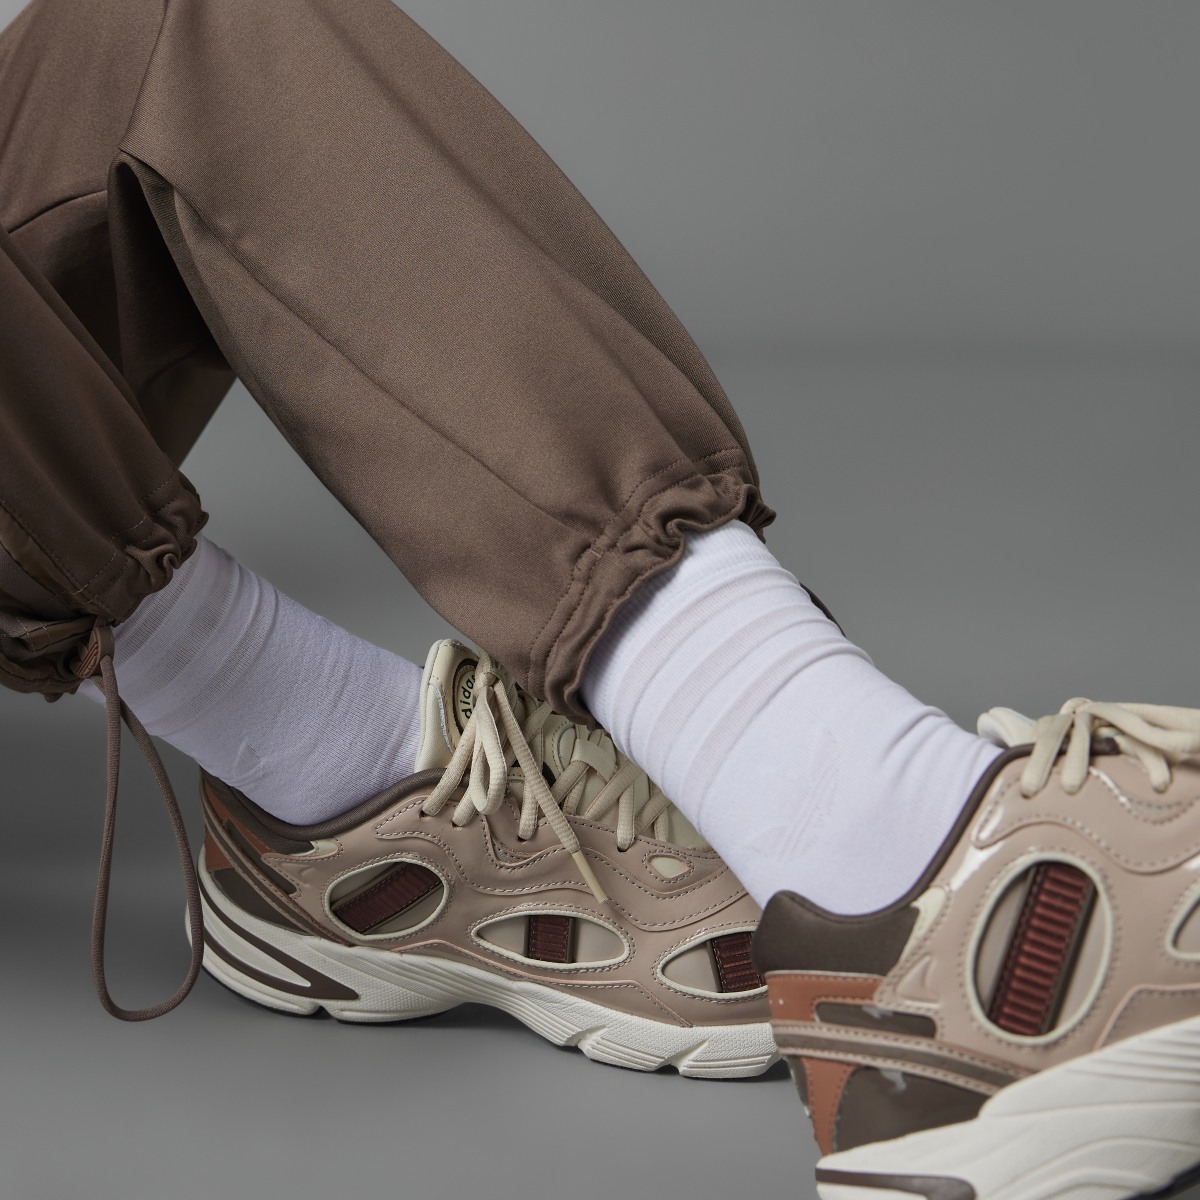 Adidas Collective Power Mid-Cut Bilekli Çorap - 3 Çift. 5